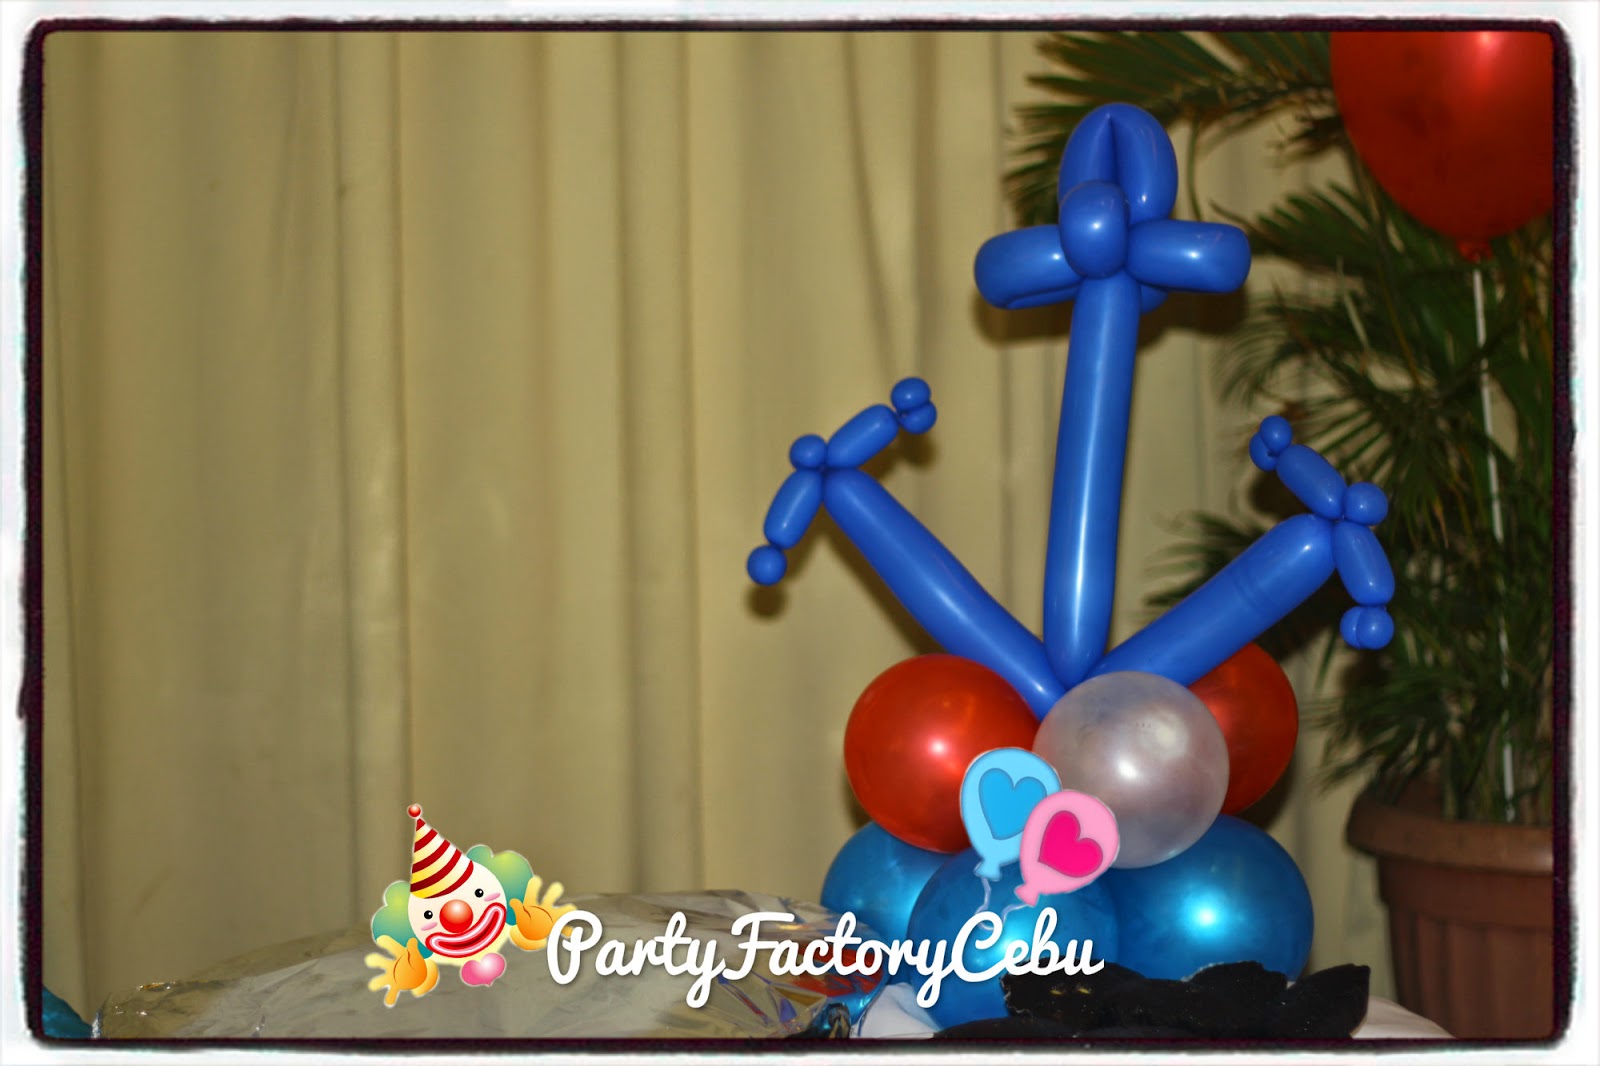 Welcome to PartyFactory Cebu: EZEKIEL'S NAUTICAL THEME BIRTHDAY PARTY